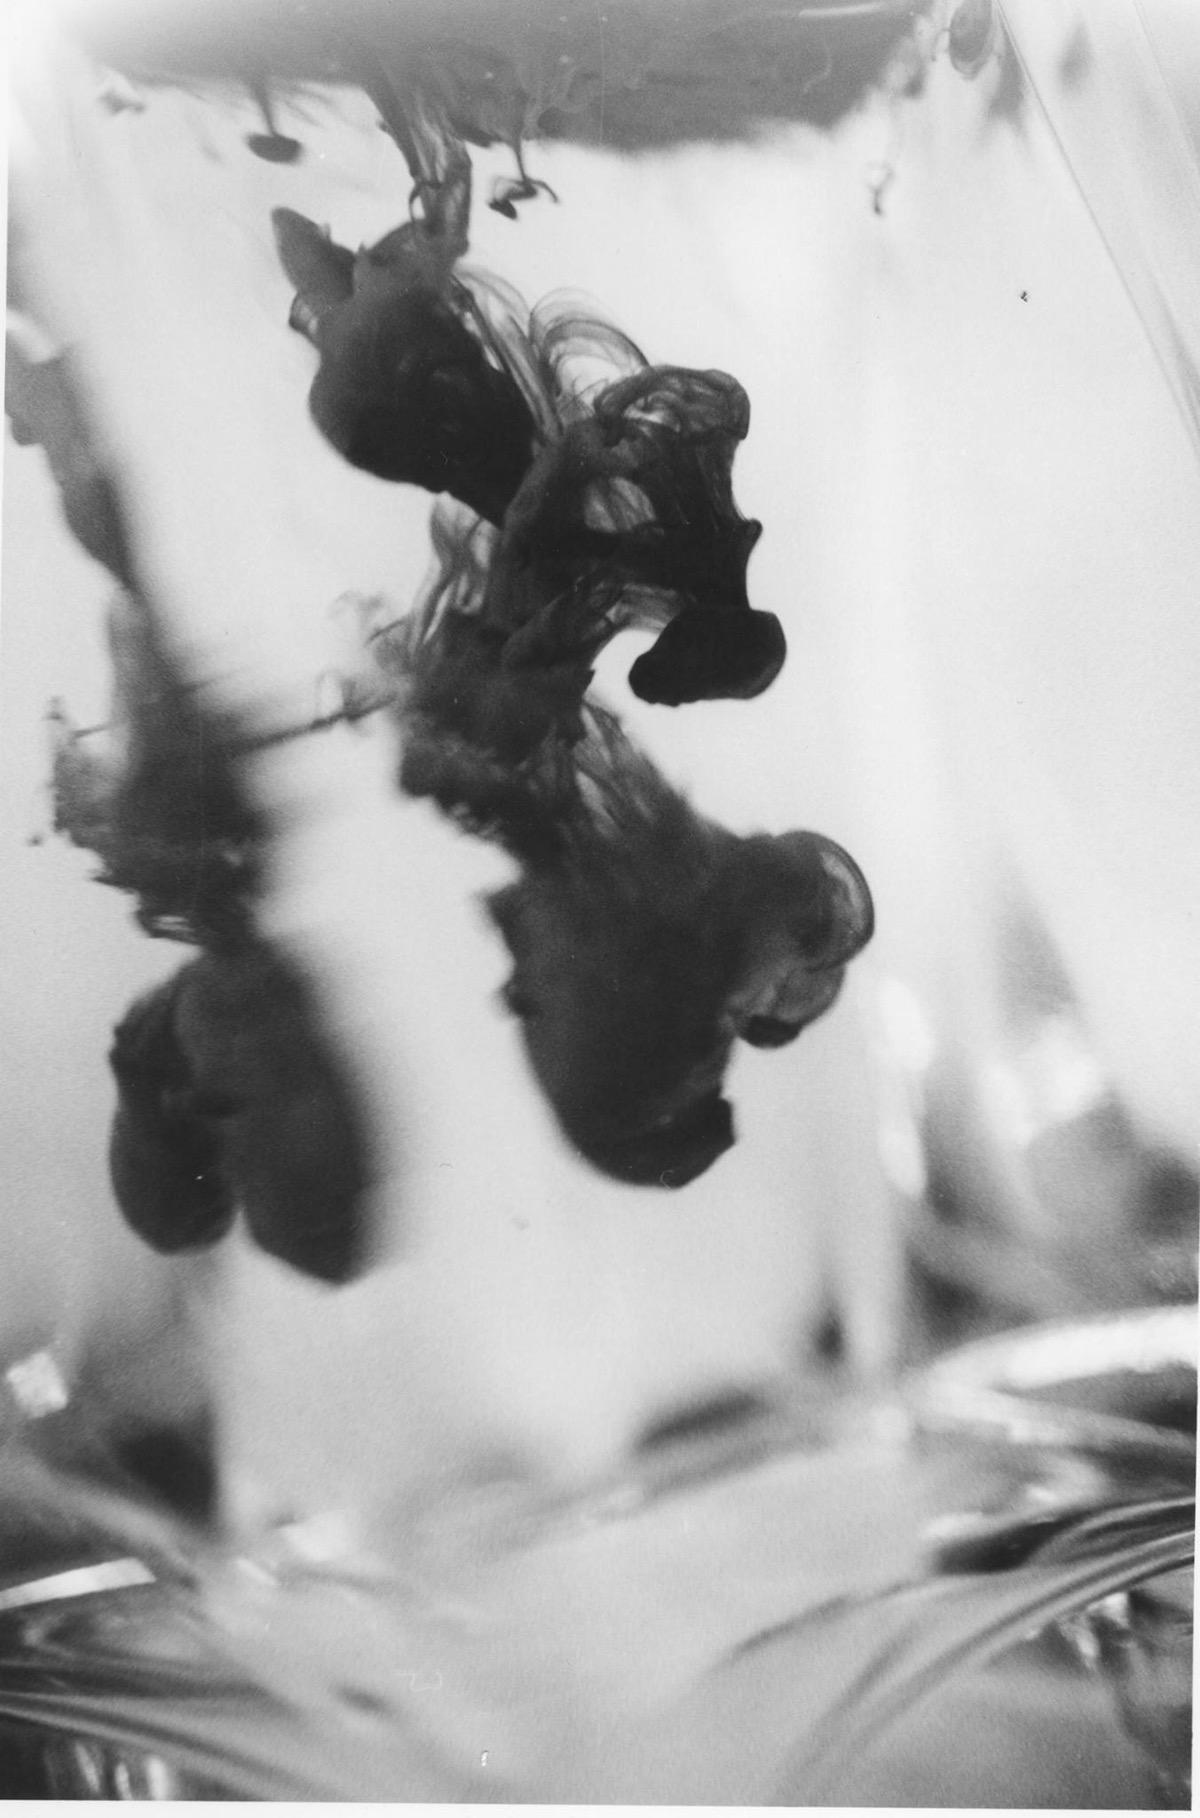 ink water Film   Photography  black White shutter speed art creative